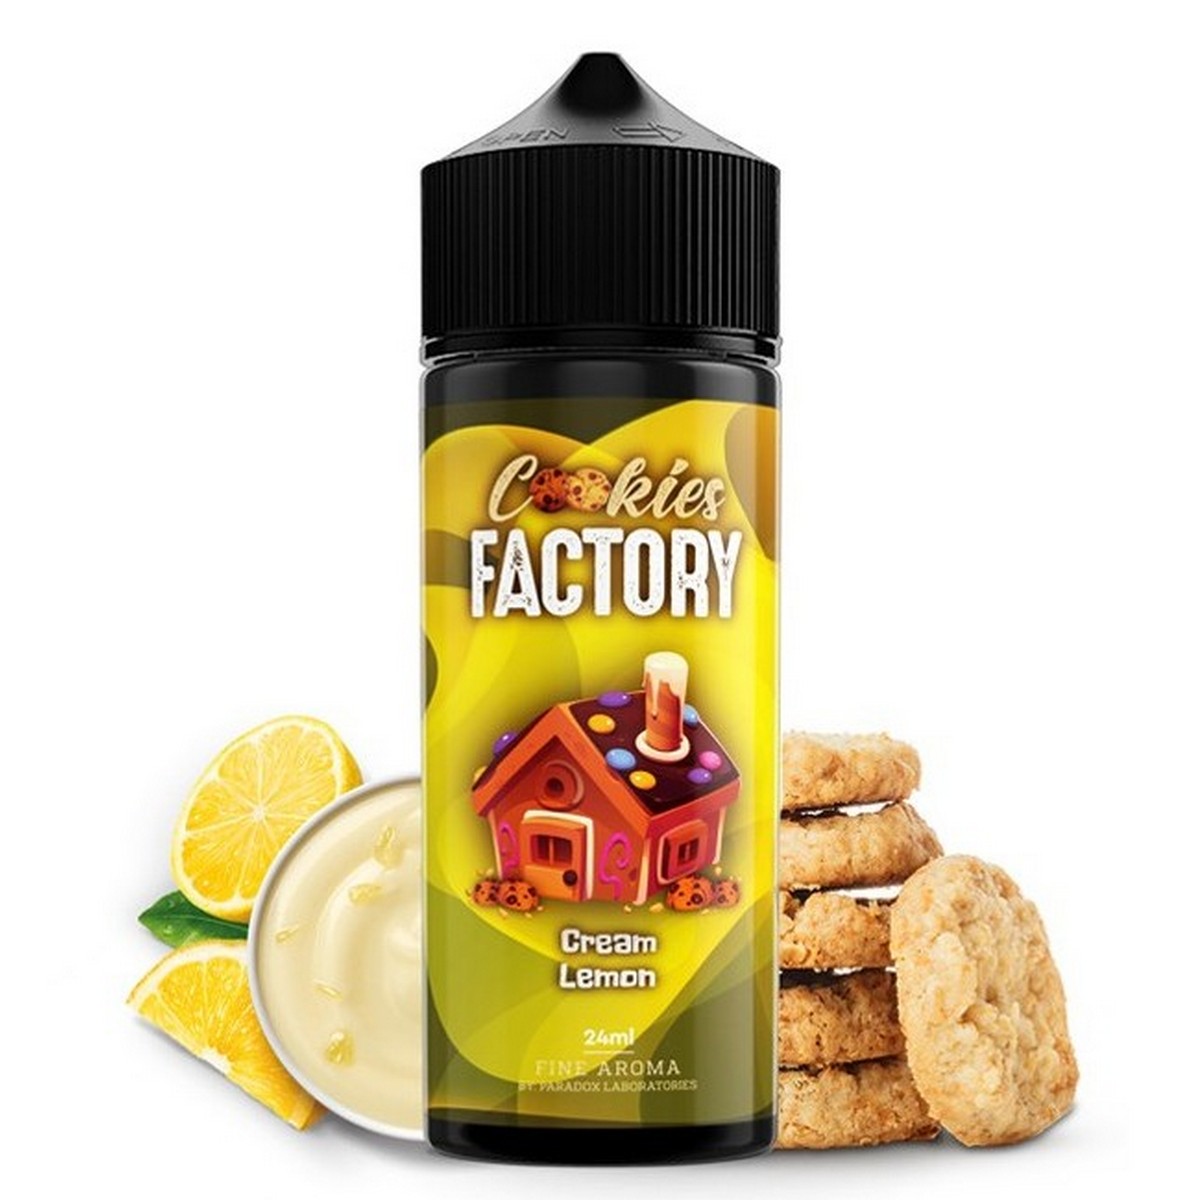 Cookies Factory Flavour Shot Cream Lemon 24ml/120ml